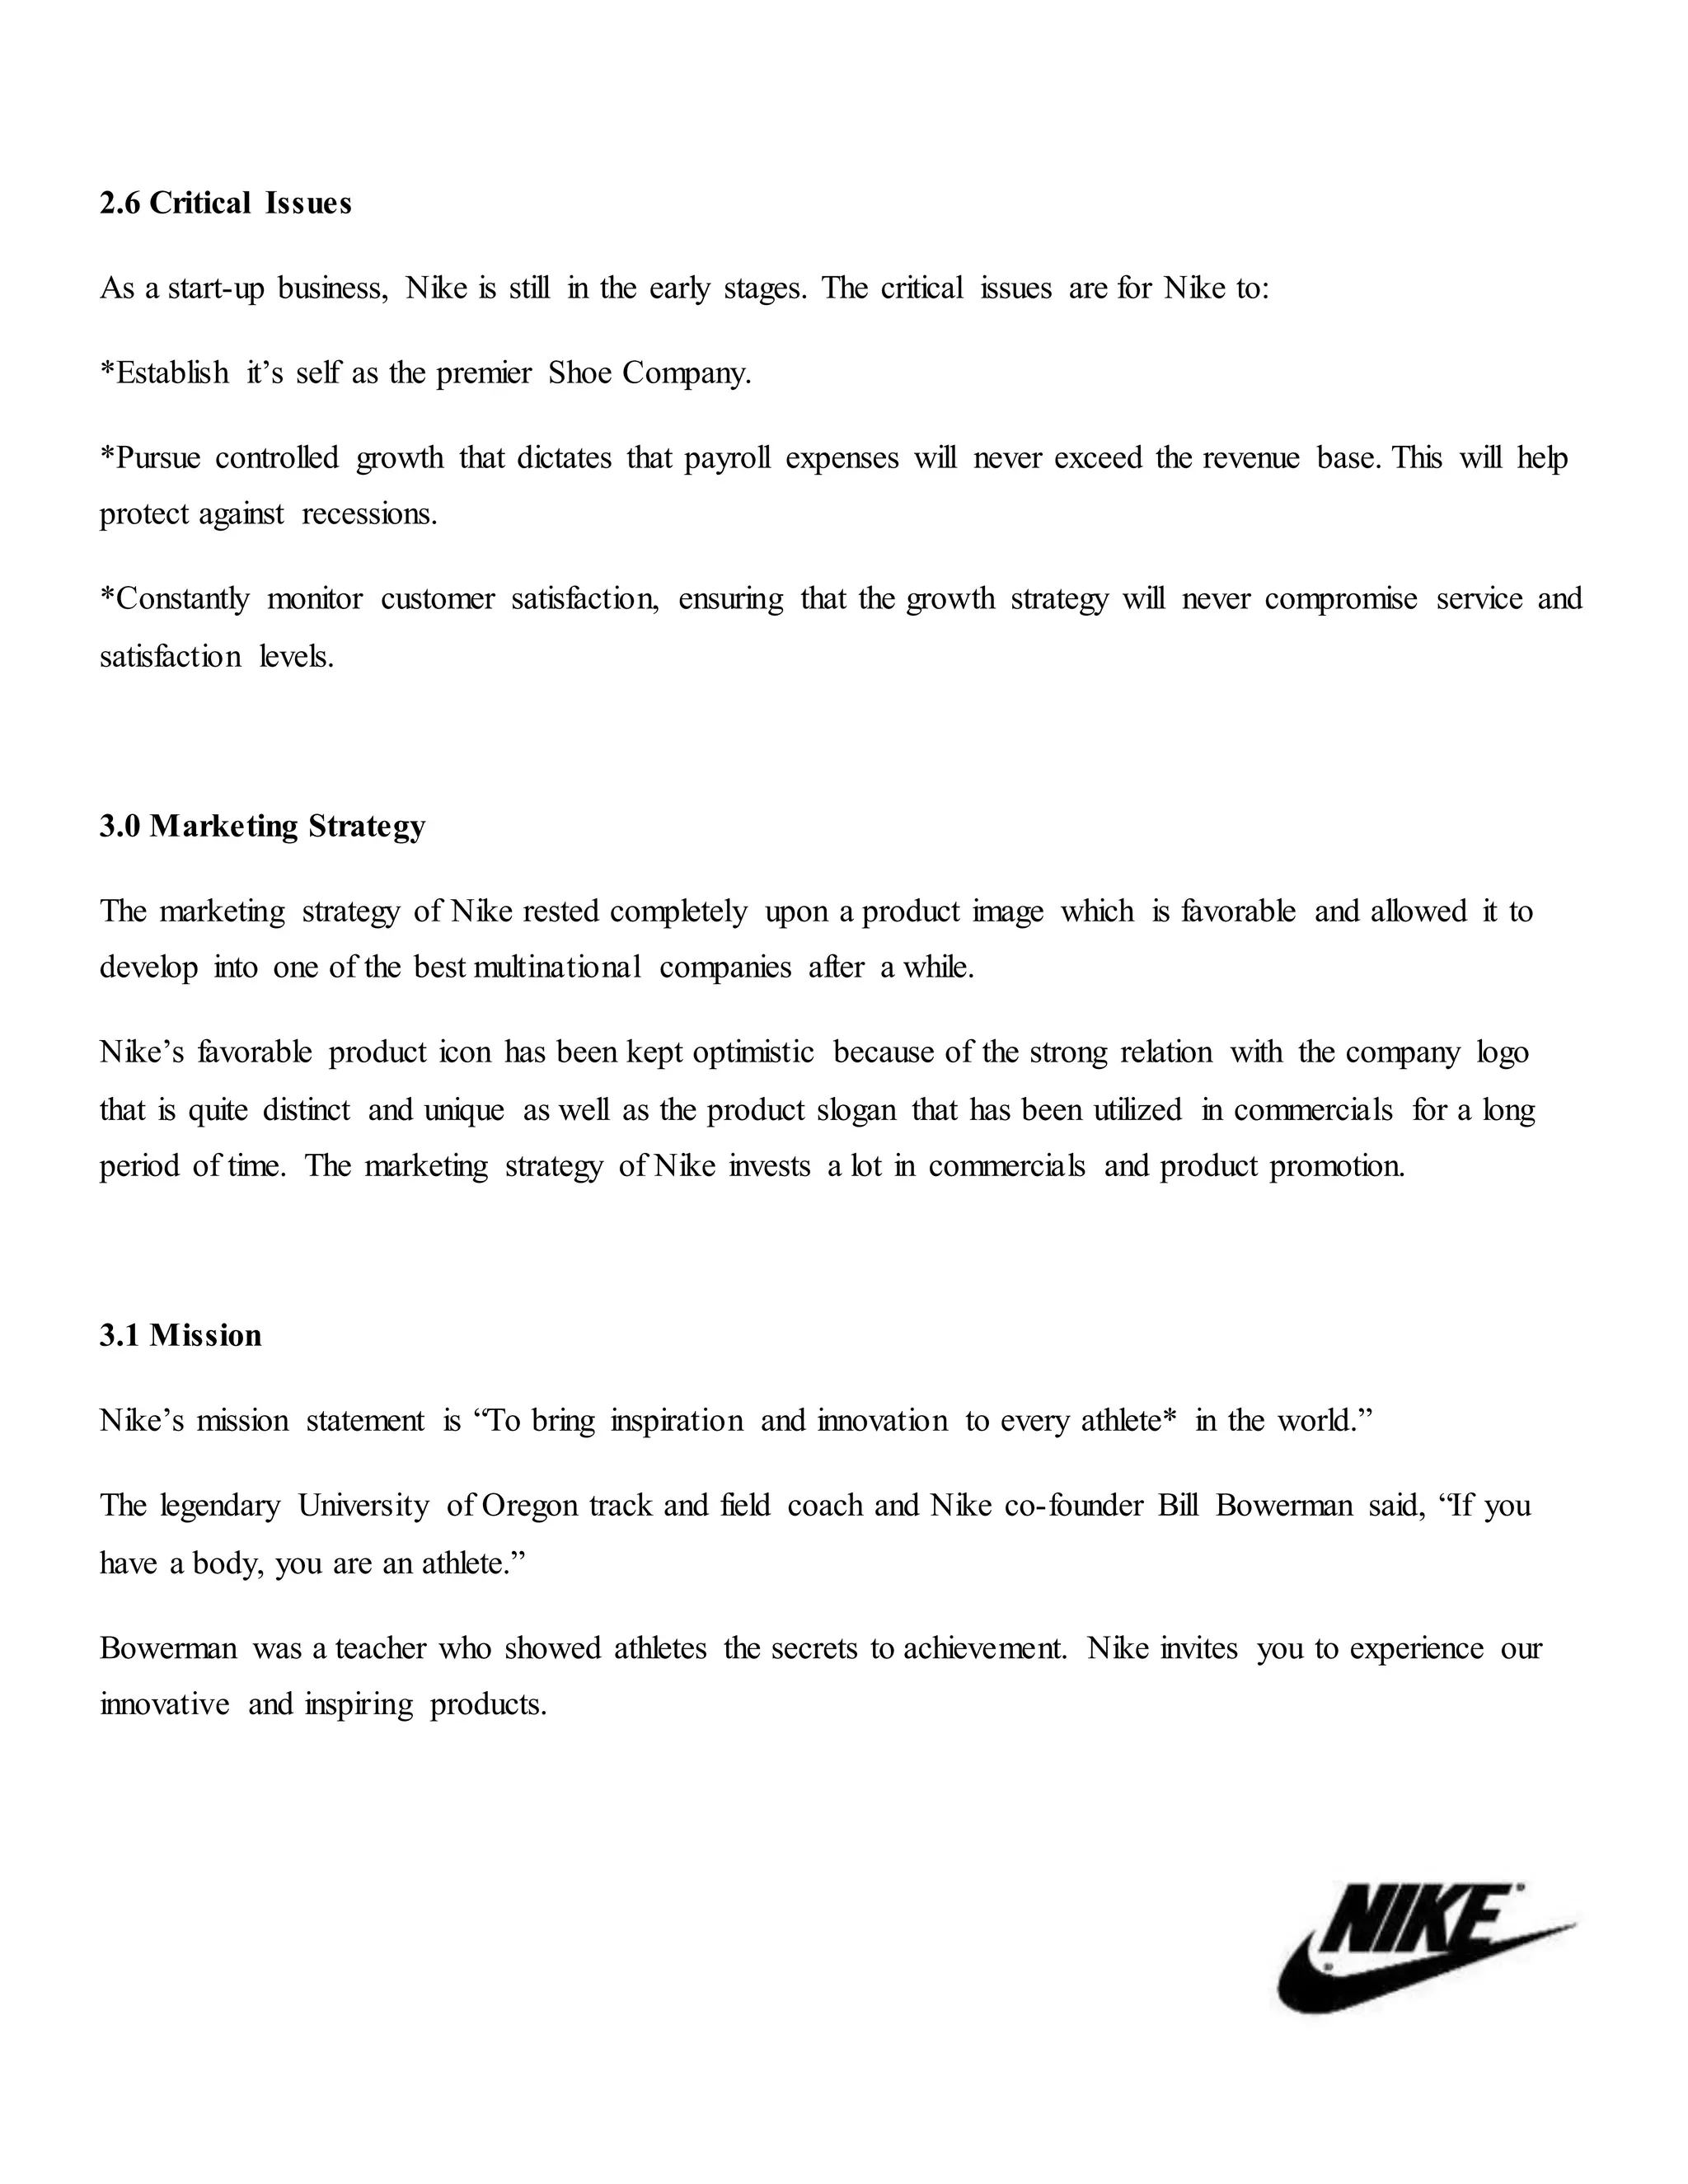 tema amplitud en Assignment on Marketing Plan of Nike shoes